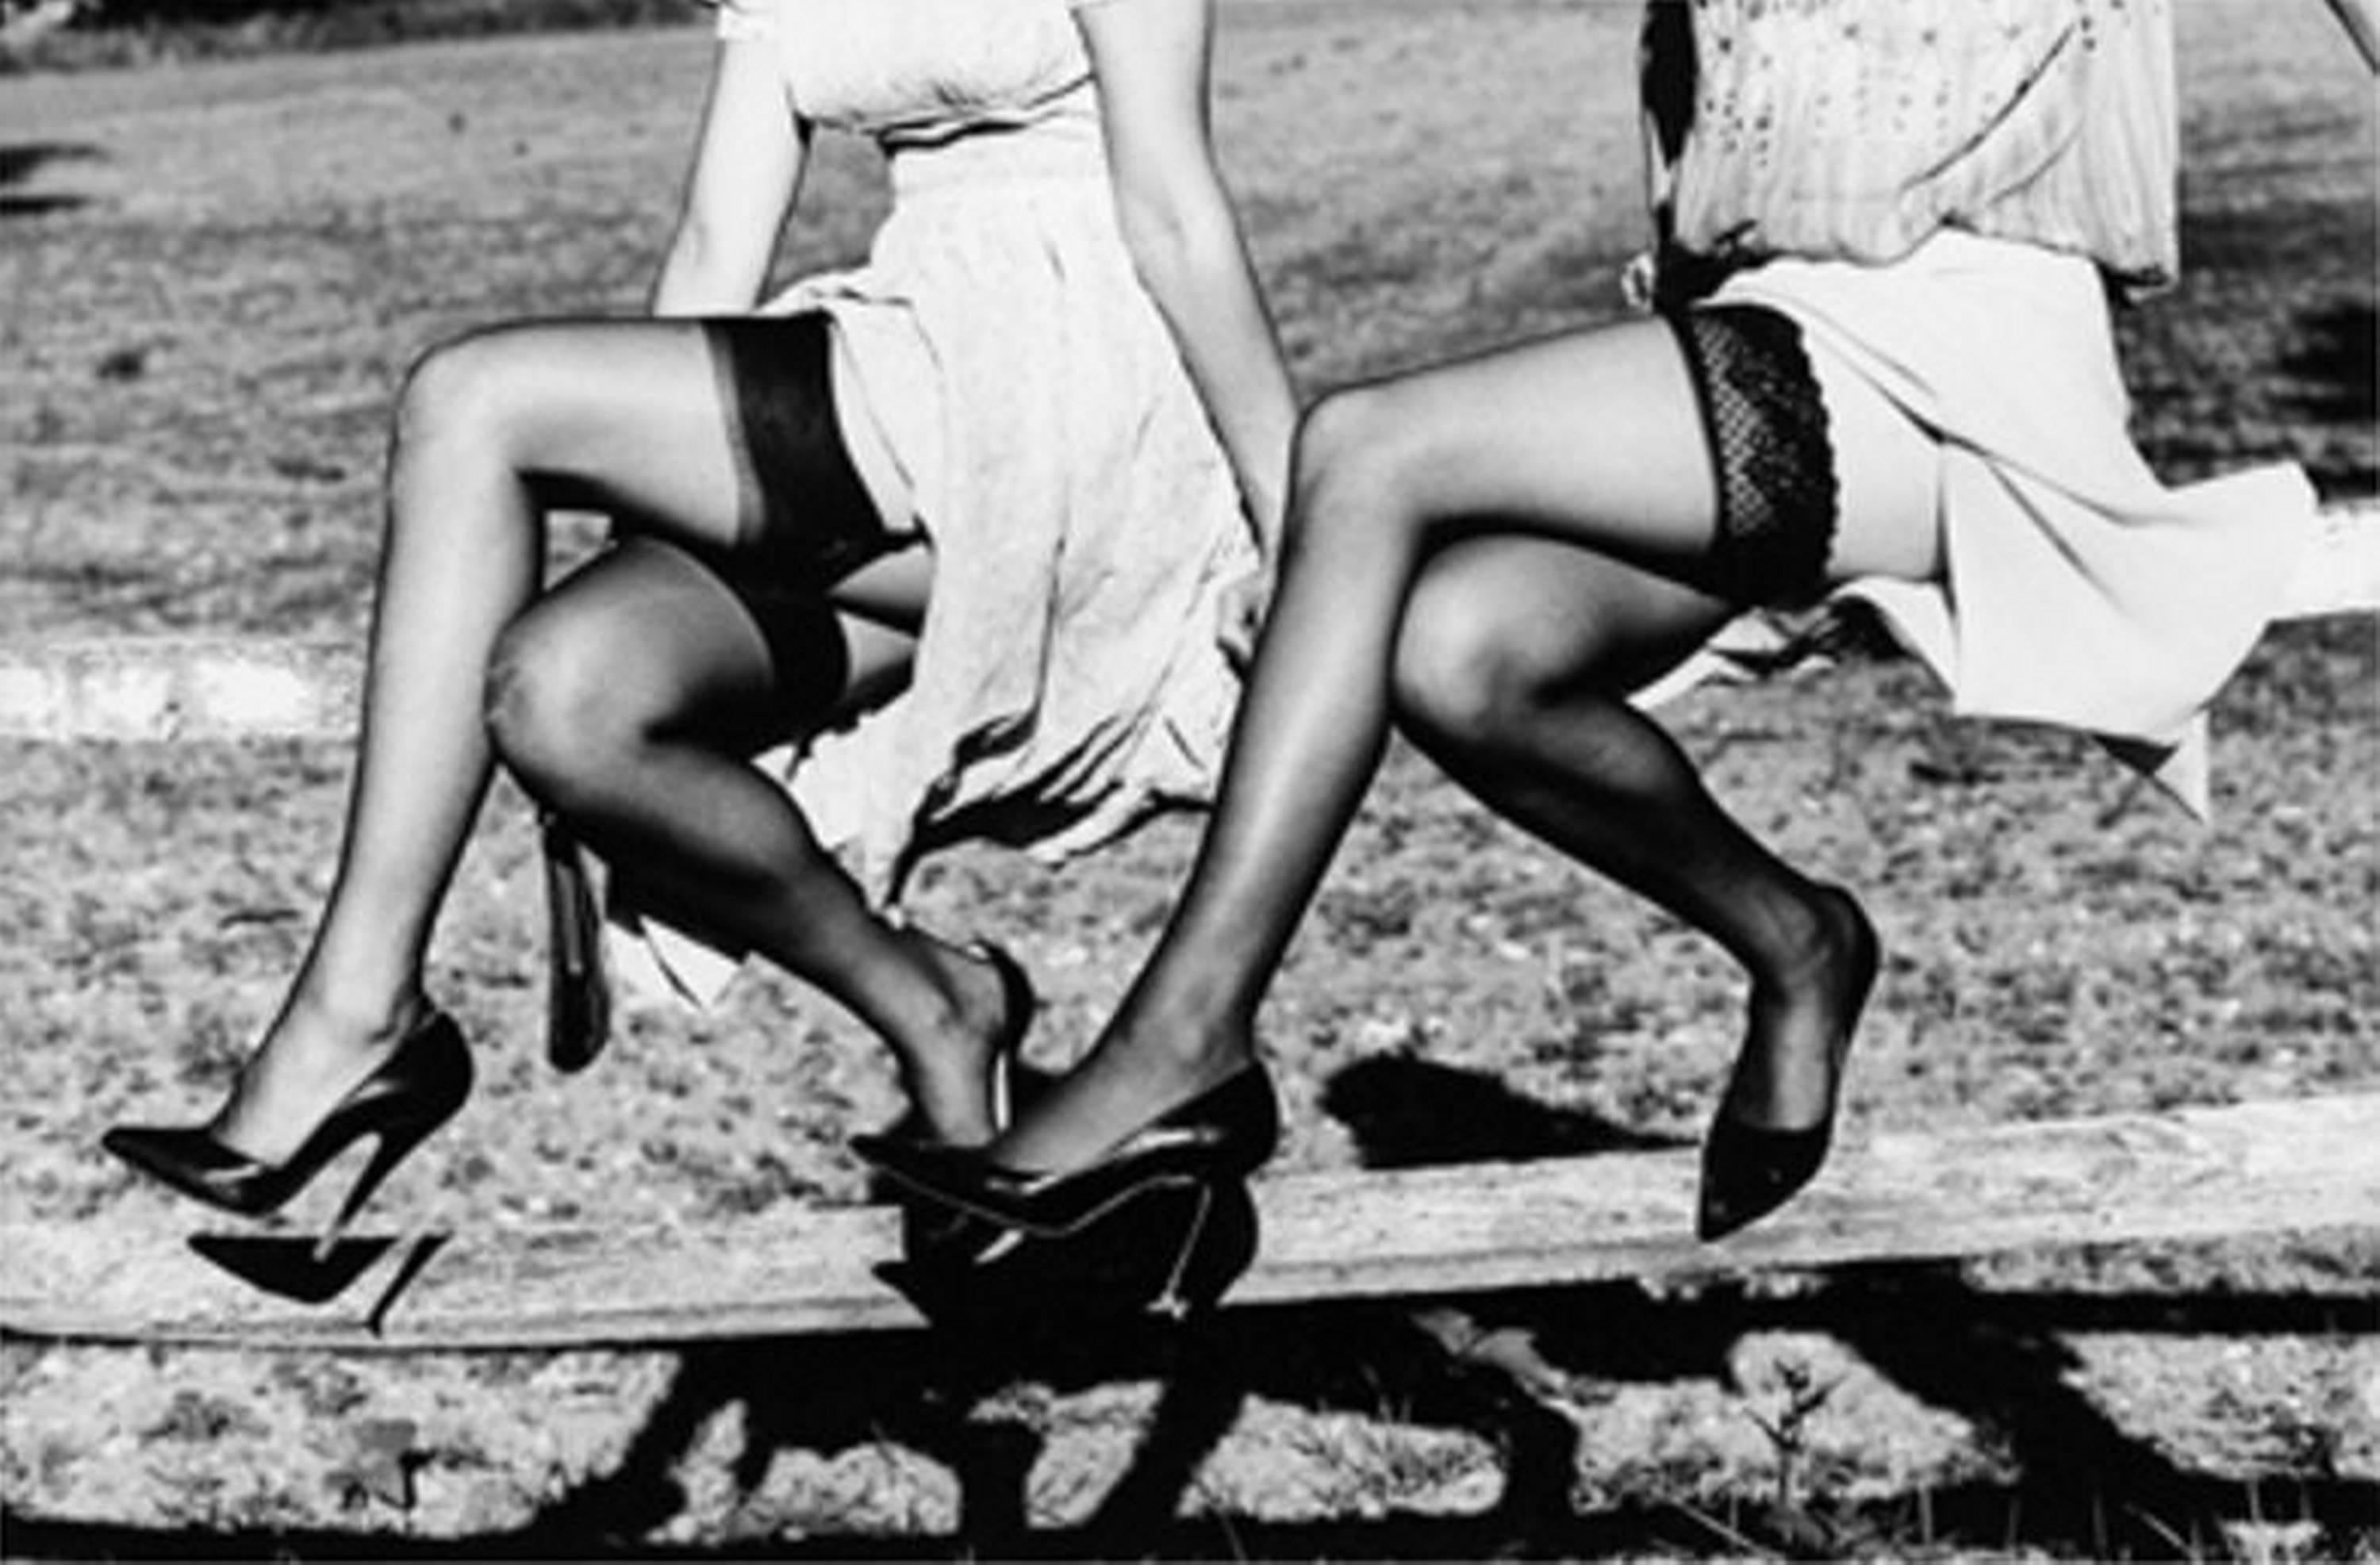 Ellen von Unwerth Figurative Photograph - Leg Show II - Models in Stockings sitting on a fence, fine art photography, 2002